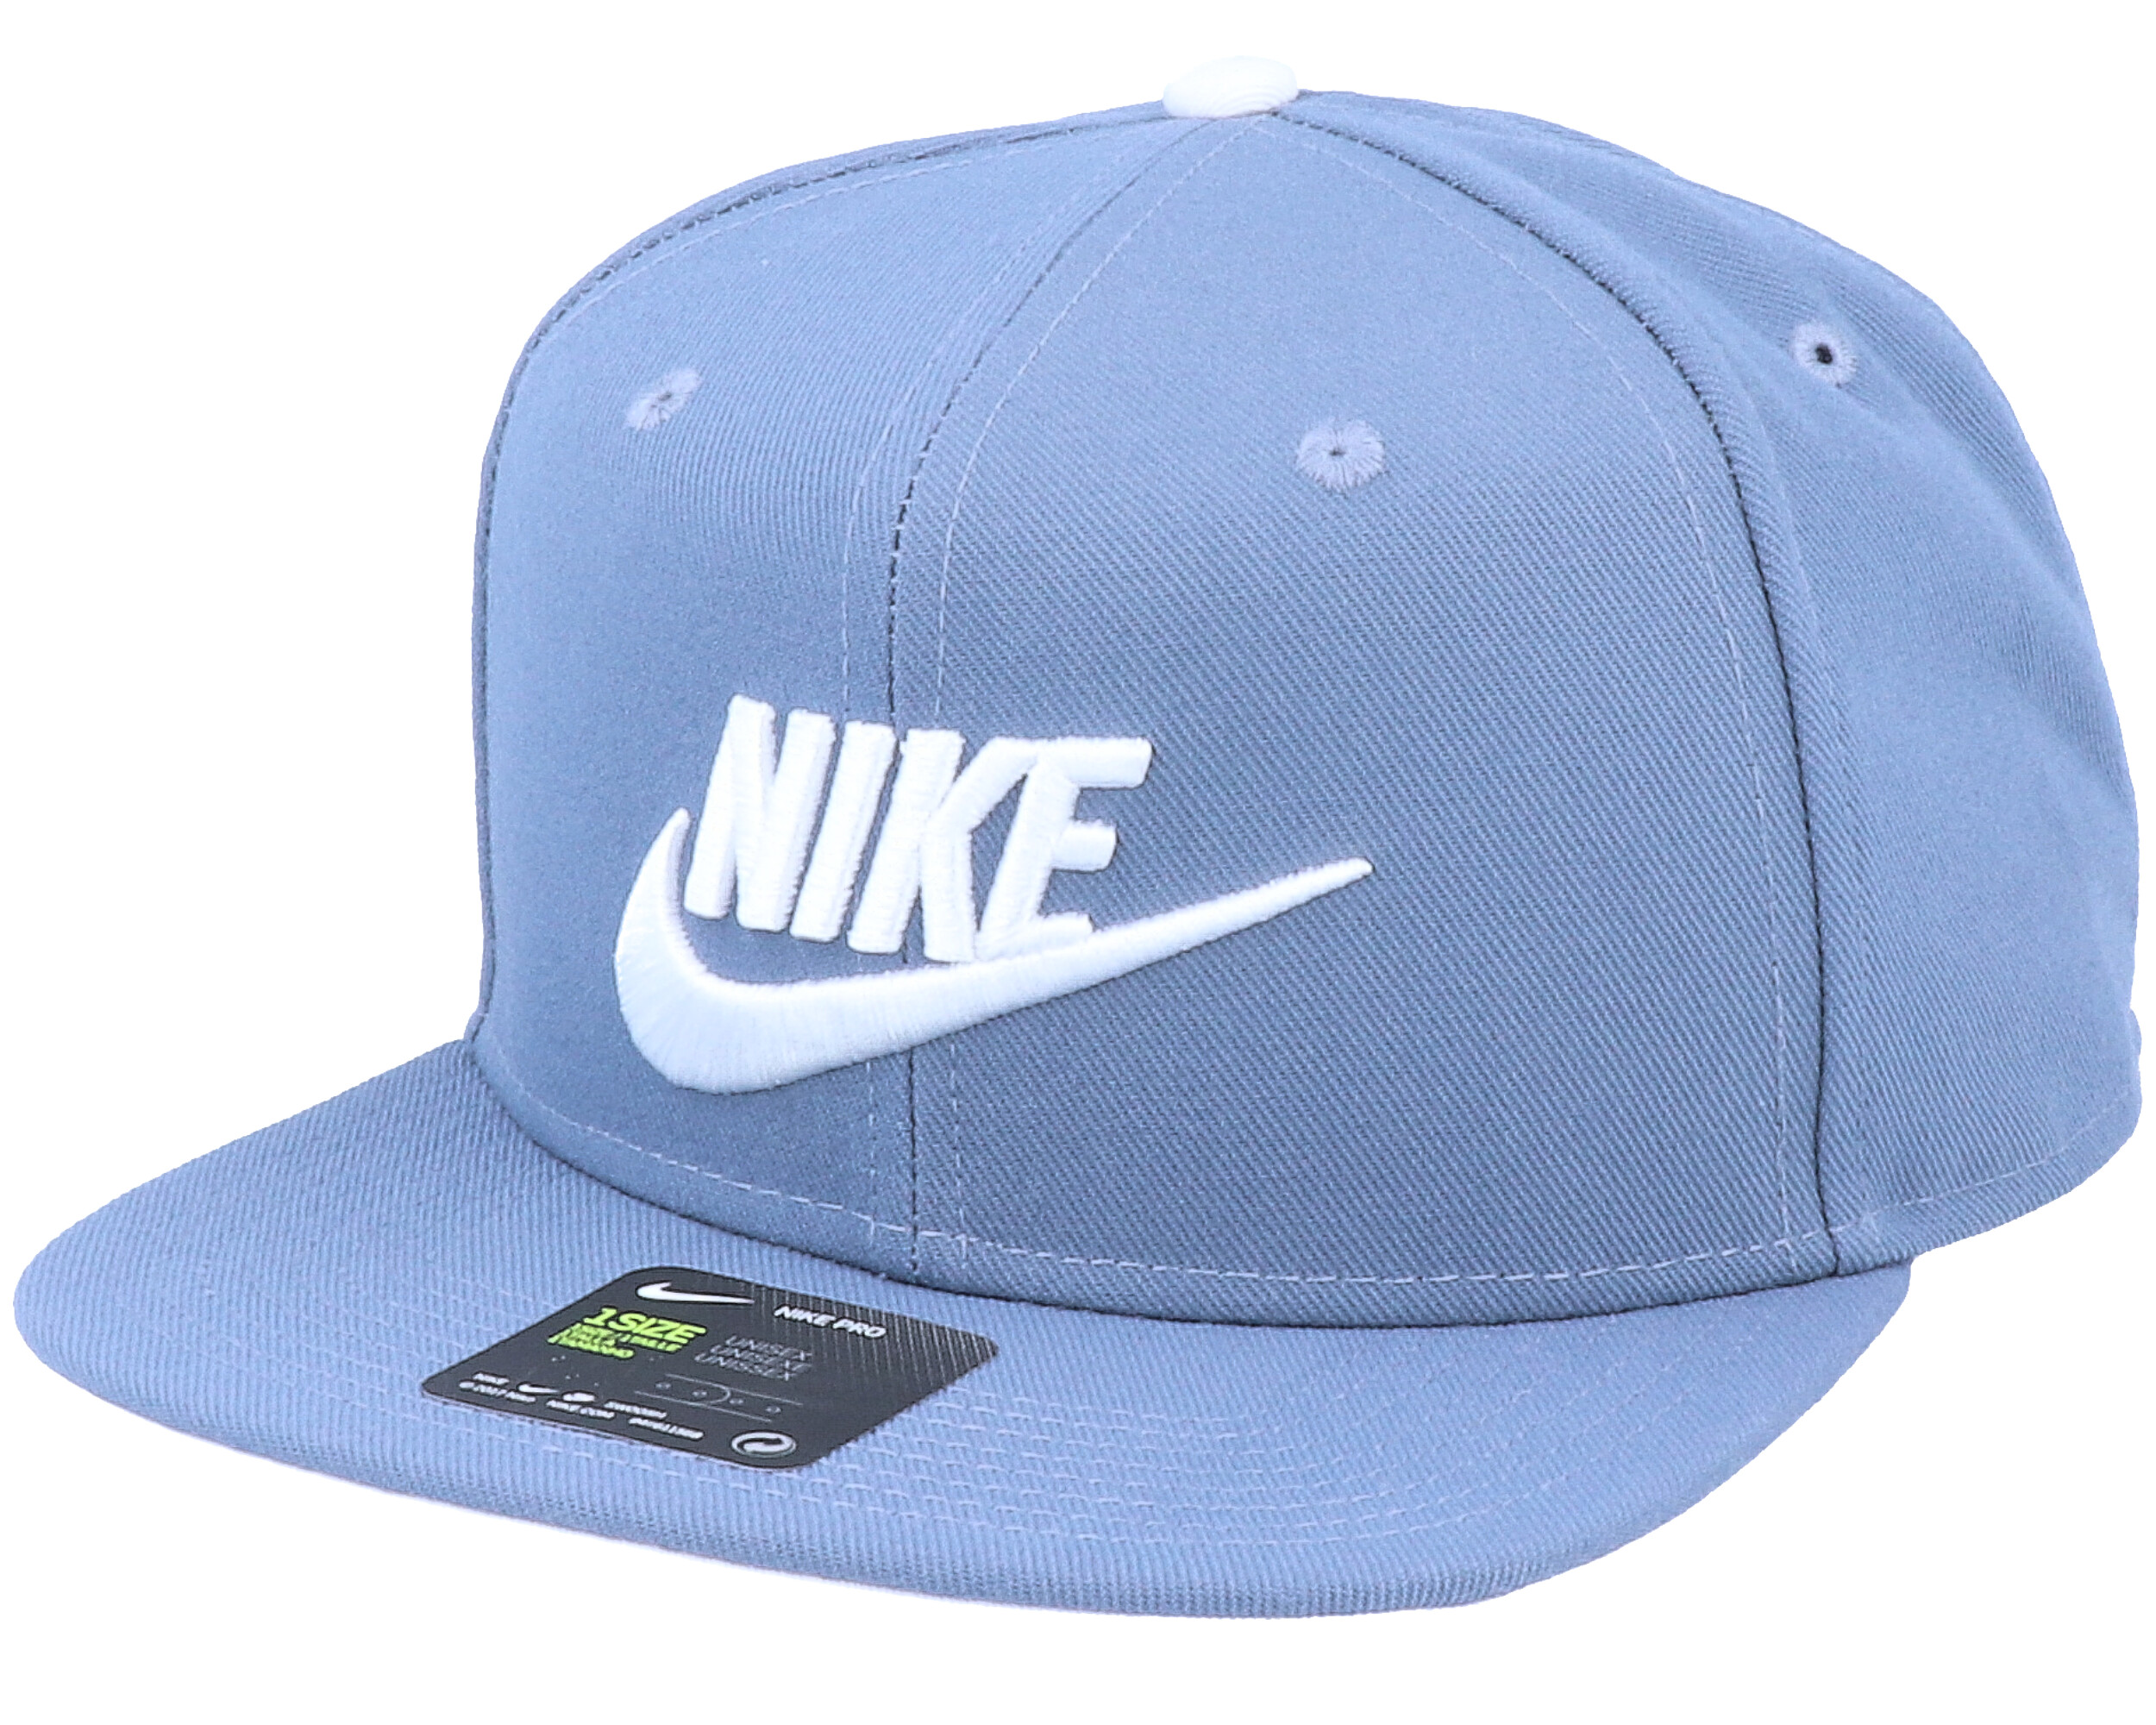 Pro Sportswear Cap Armoury Blue/White Snapback - Nike - Kšiltovka ...